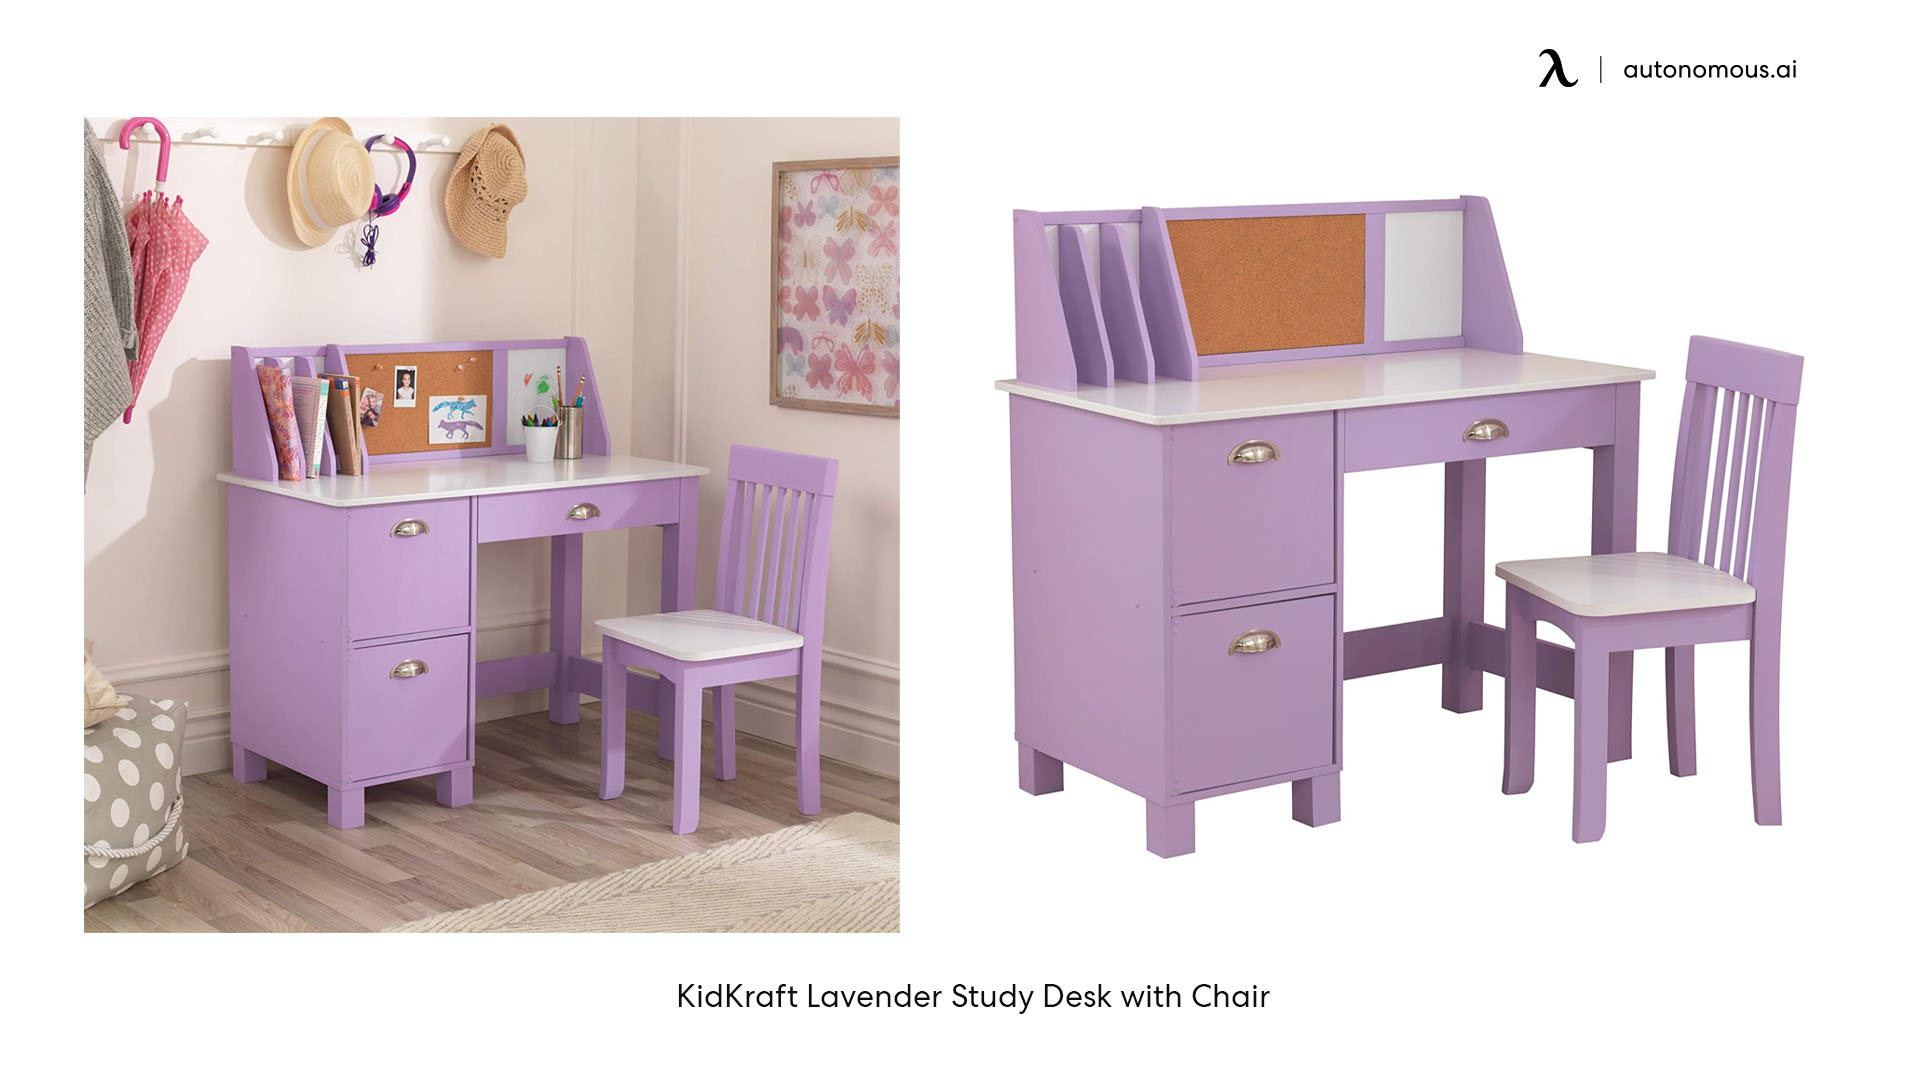 KidKraft Lavender small study desk